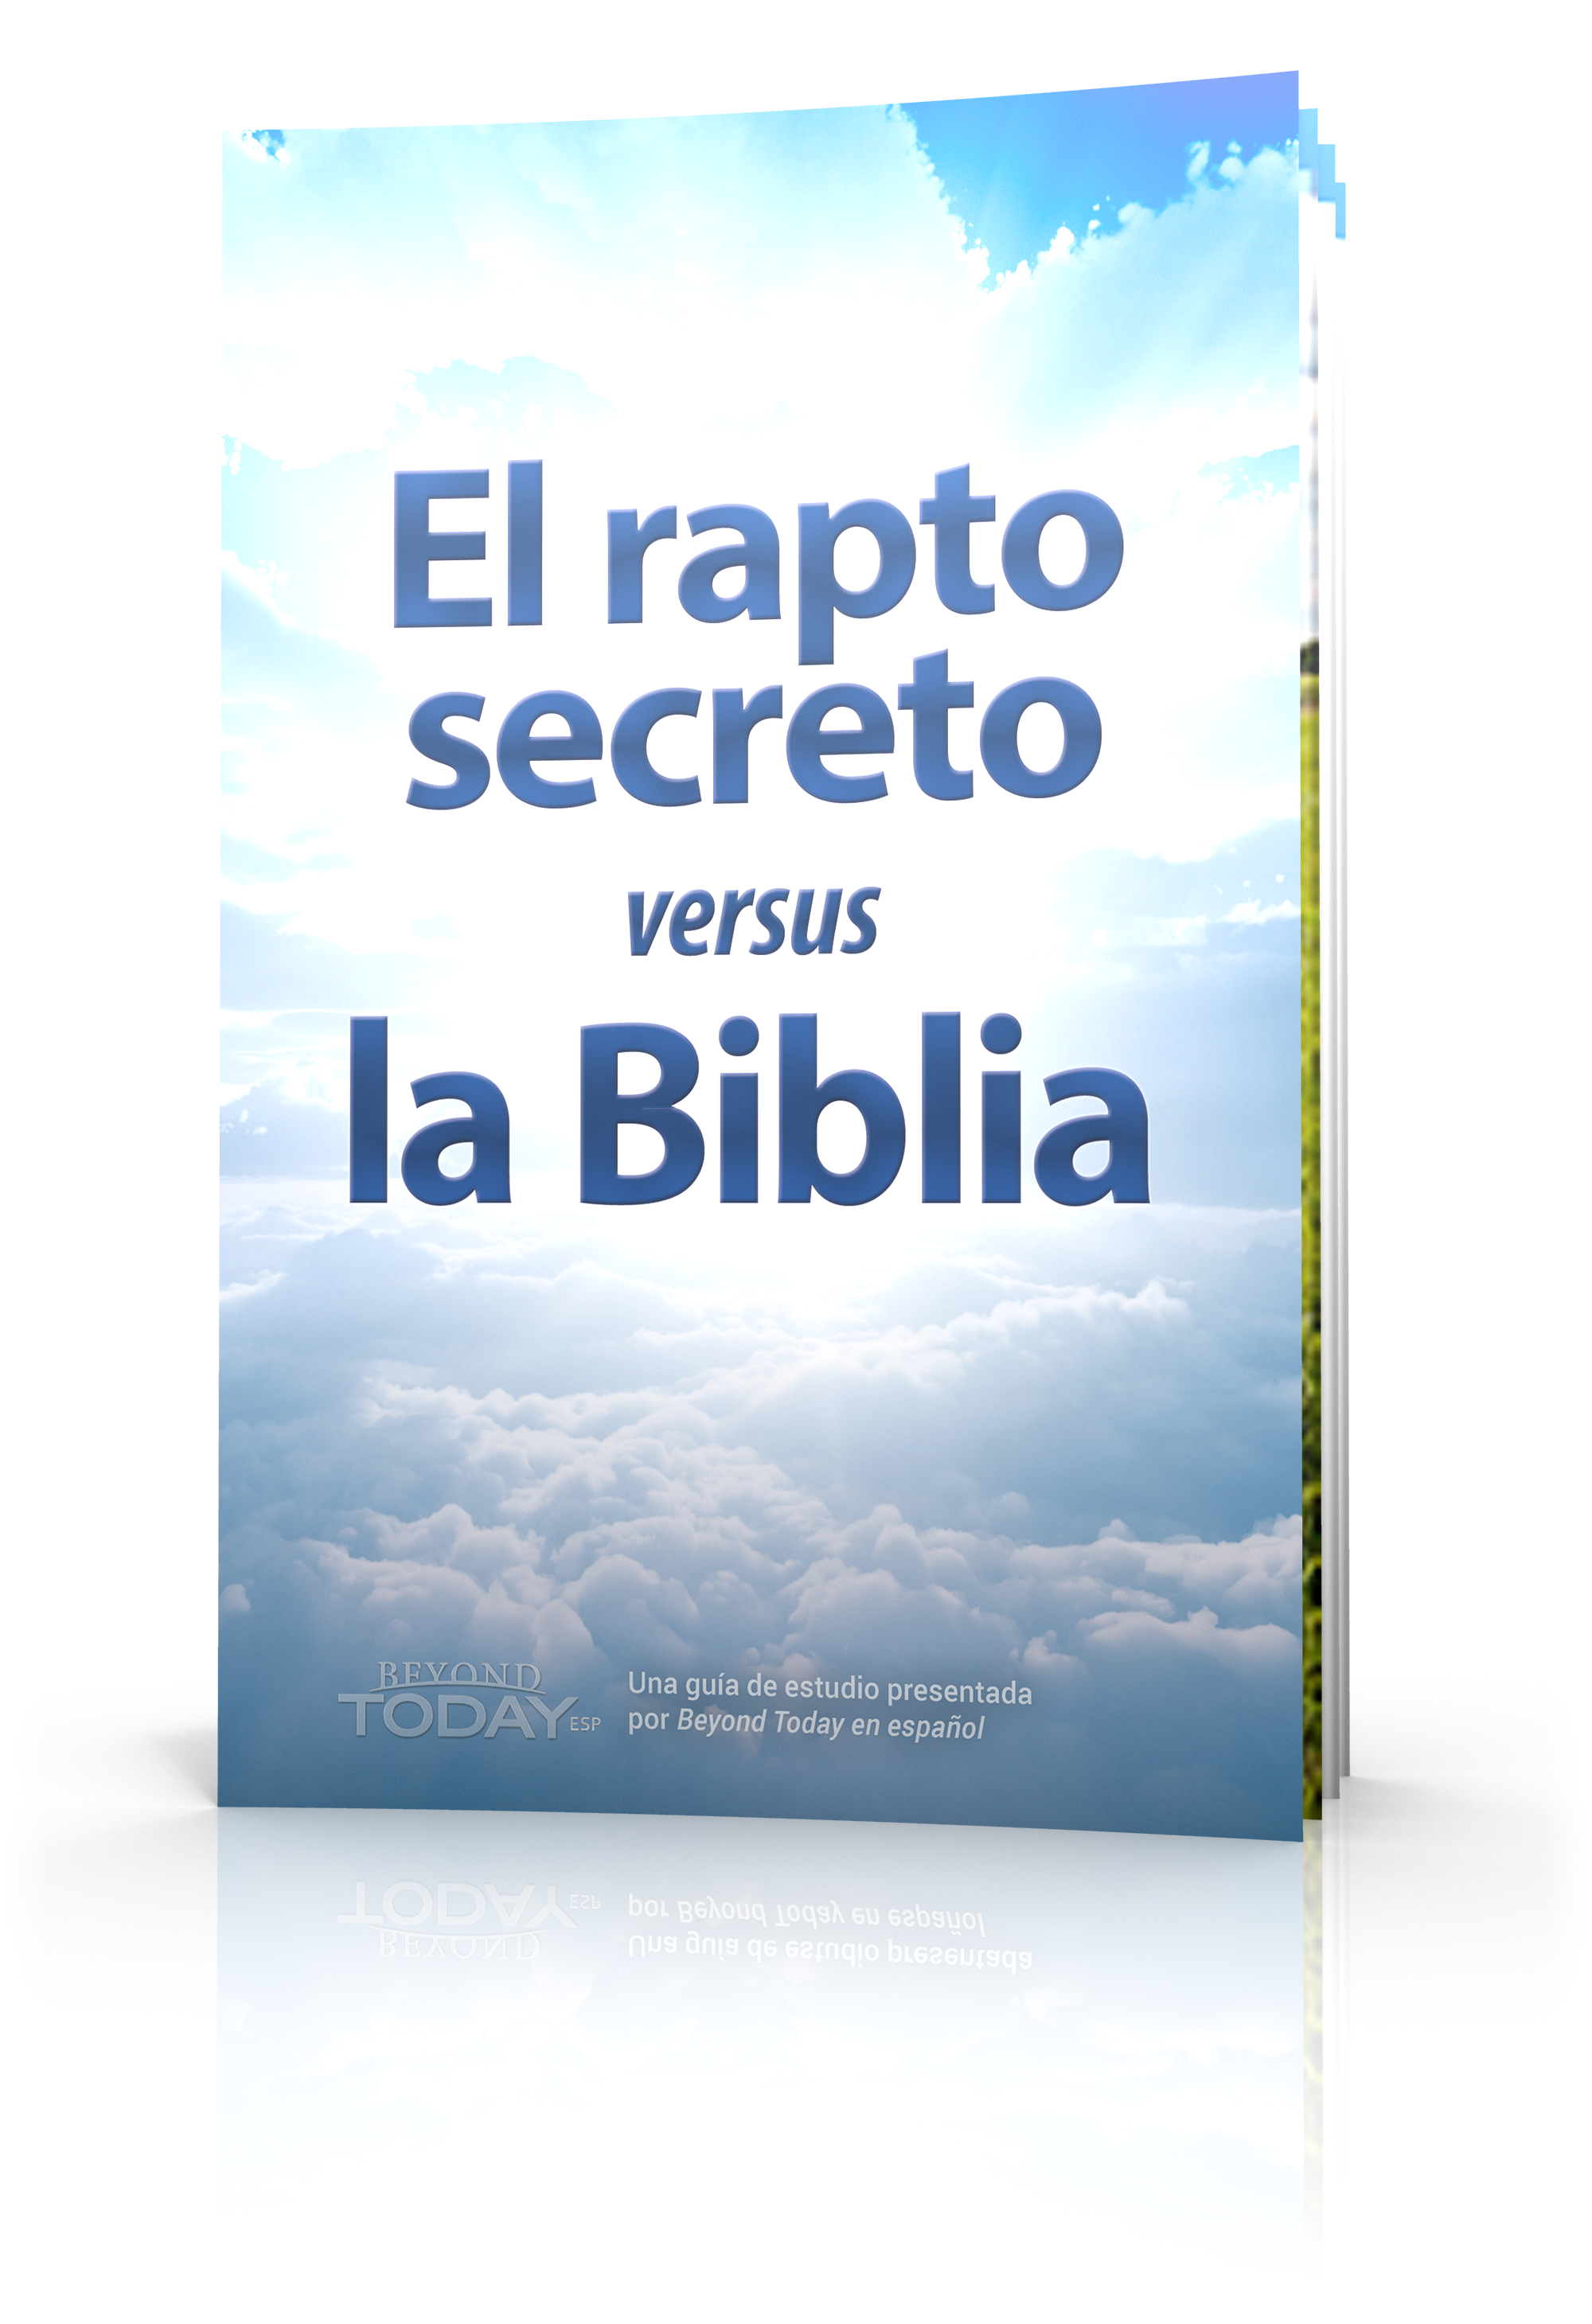 El rapto secreto versus la Biblia | Iglesia de Dios Unida